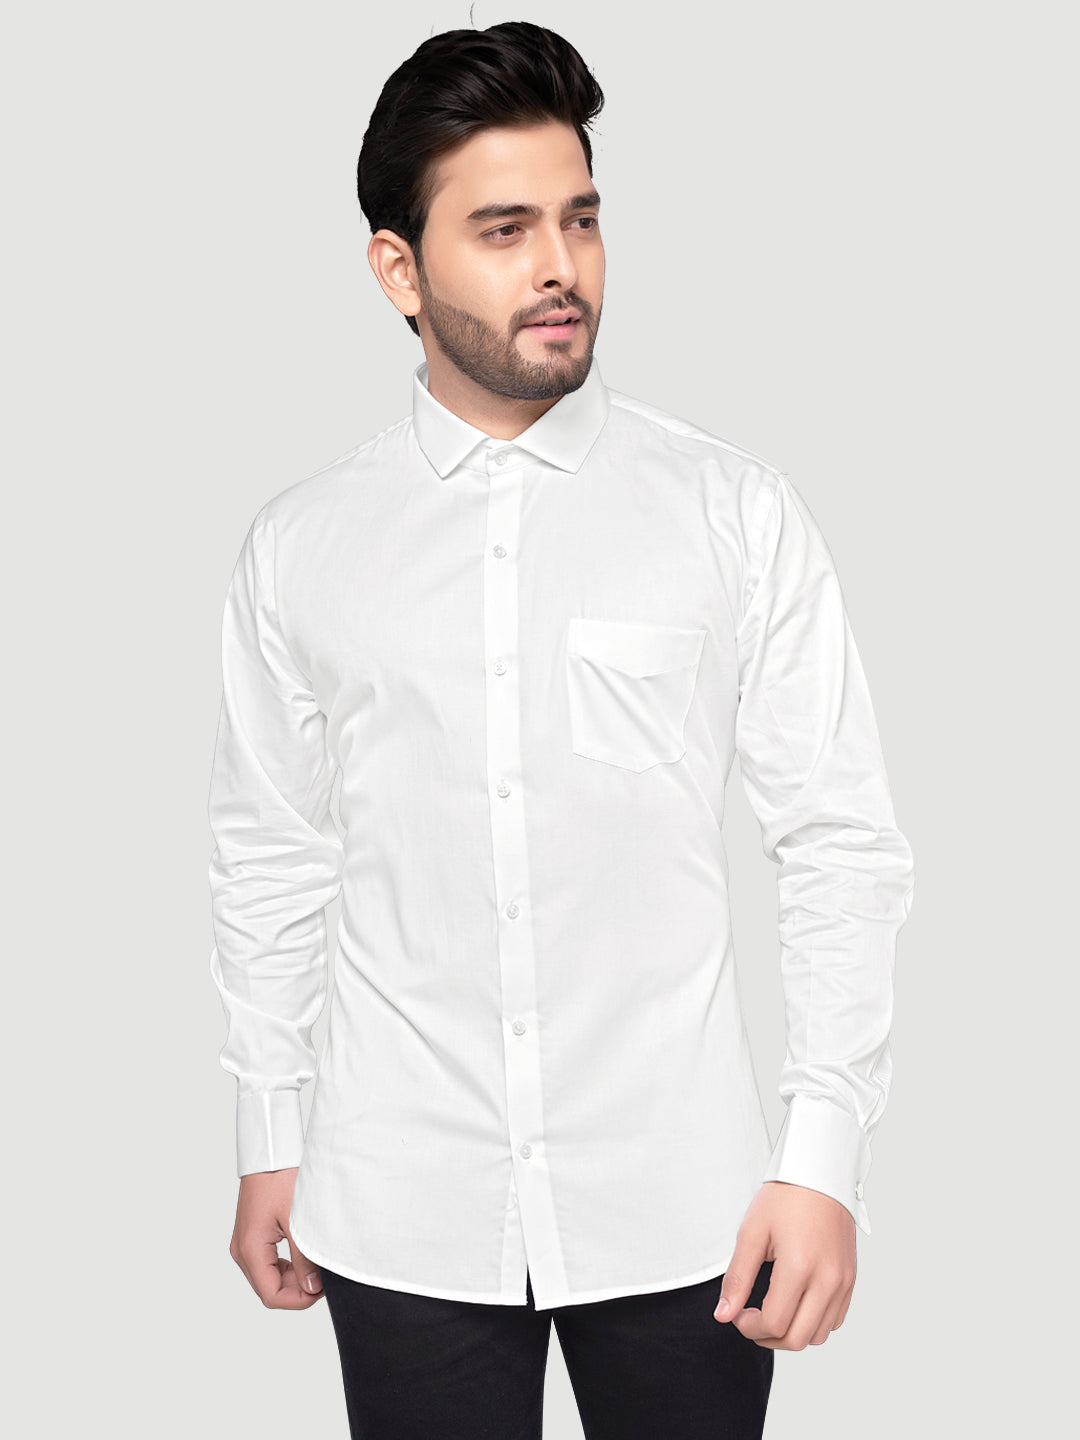 Black & White Men's Formal Cufflink Shirt White-Premium-White